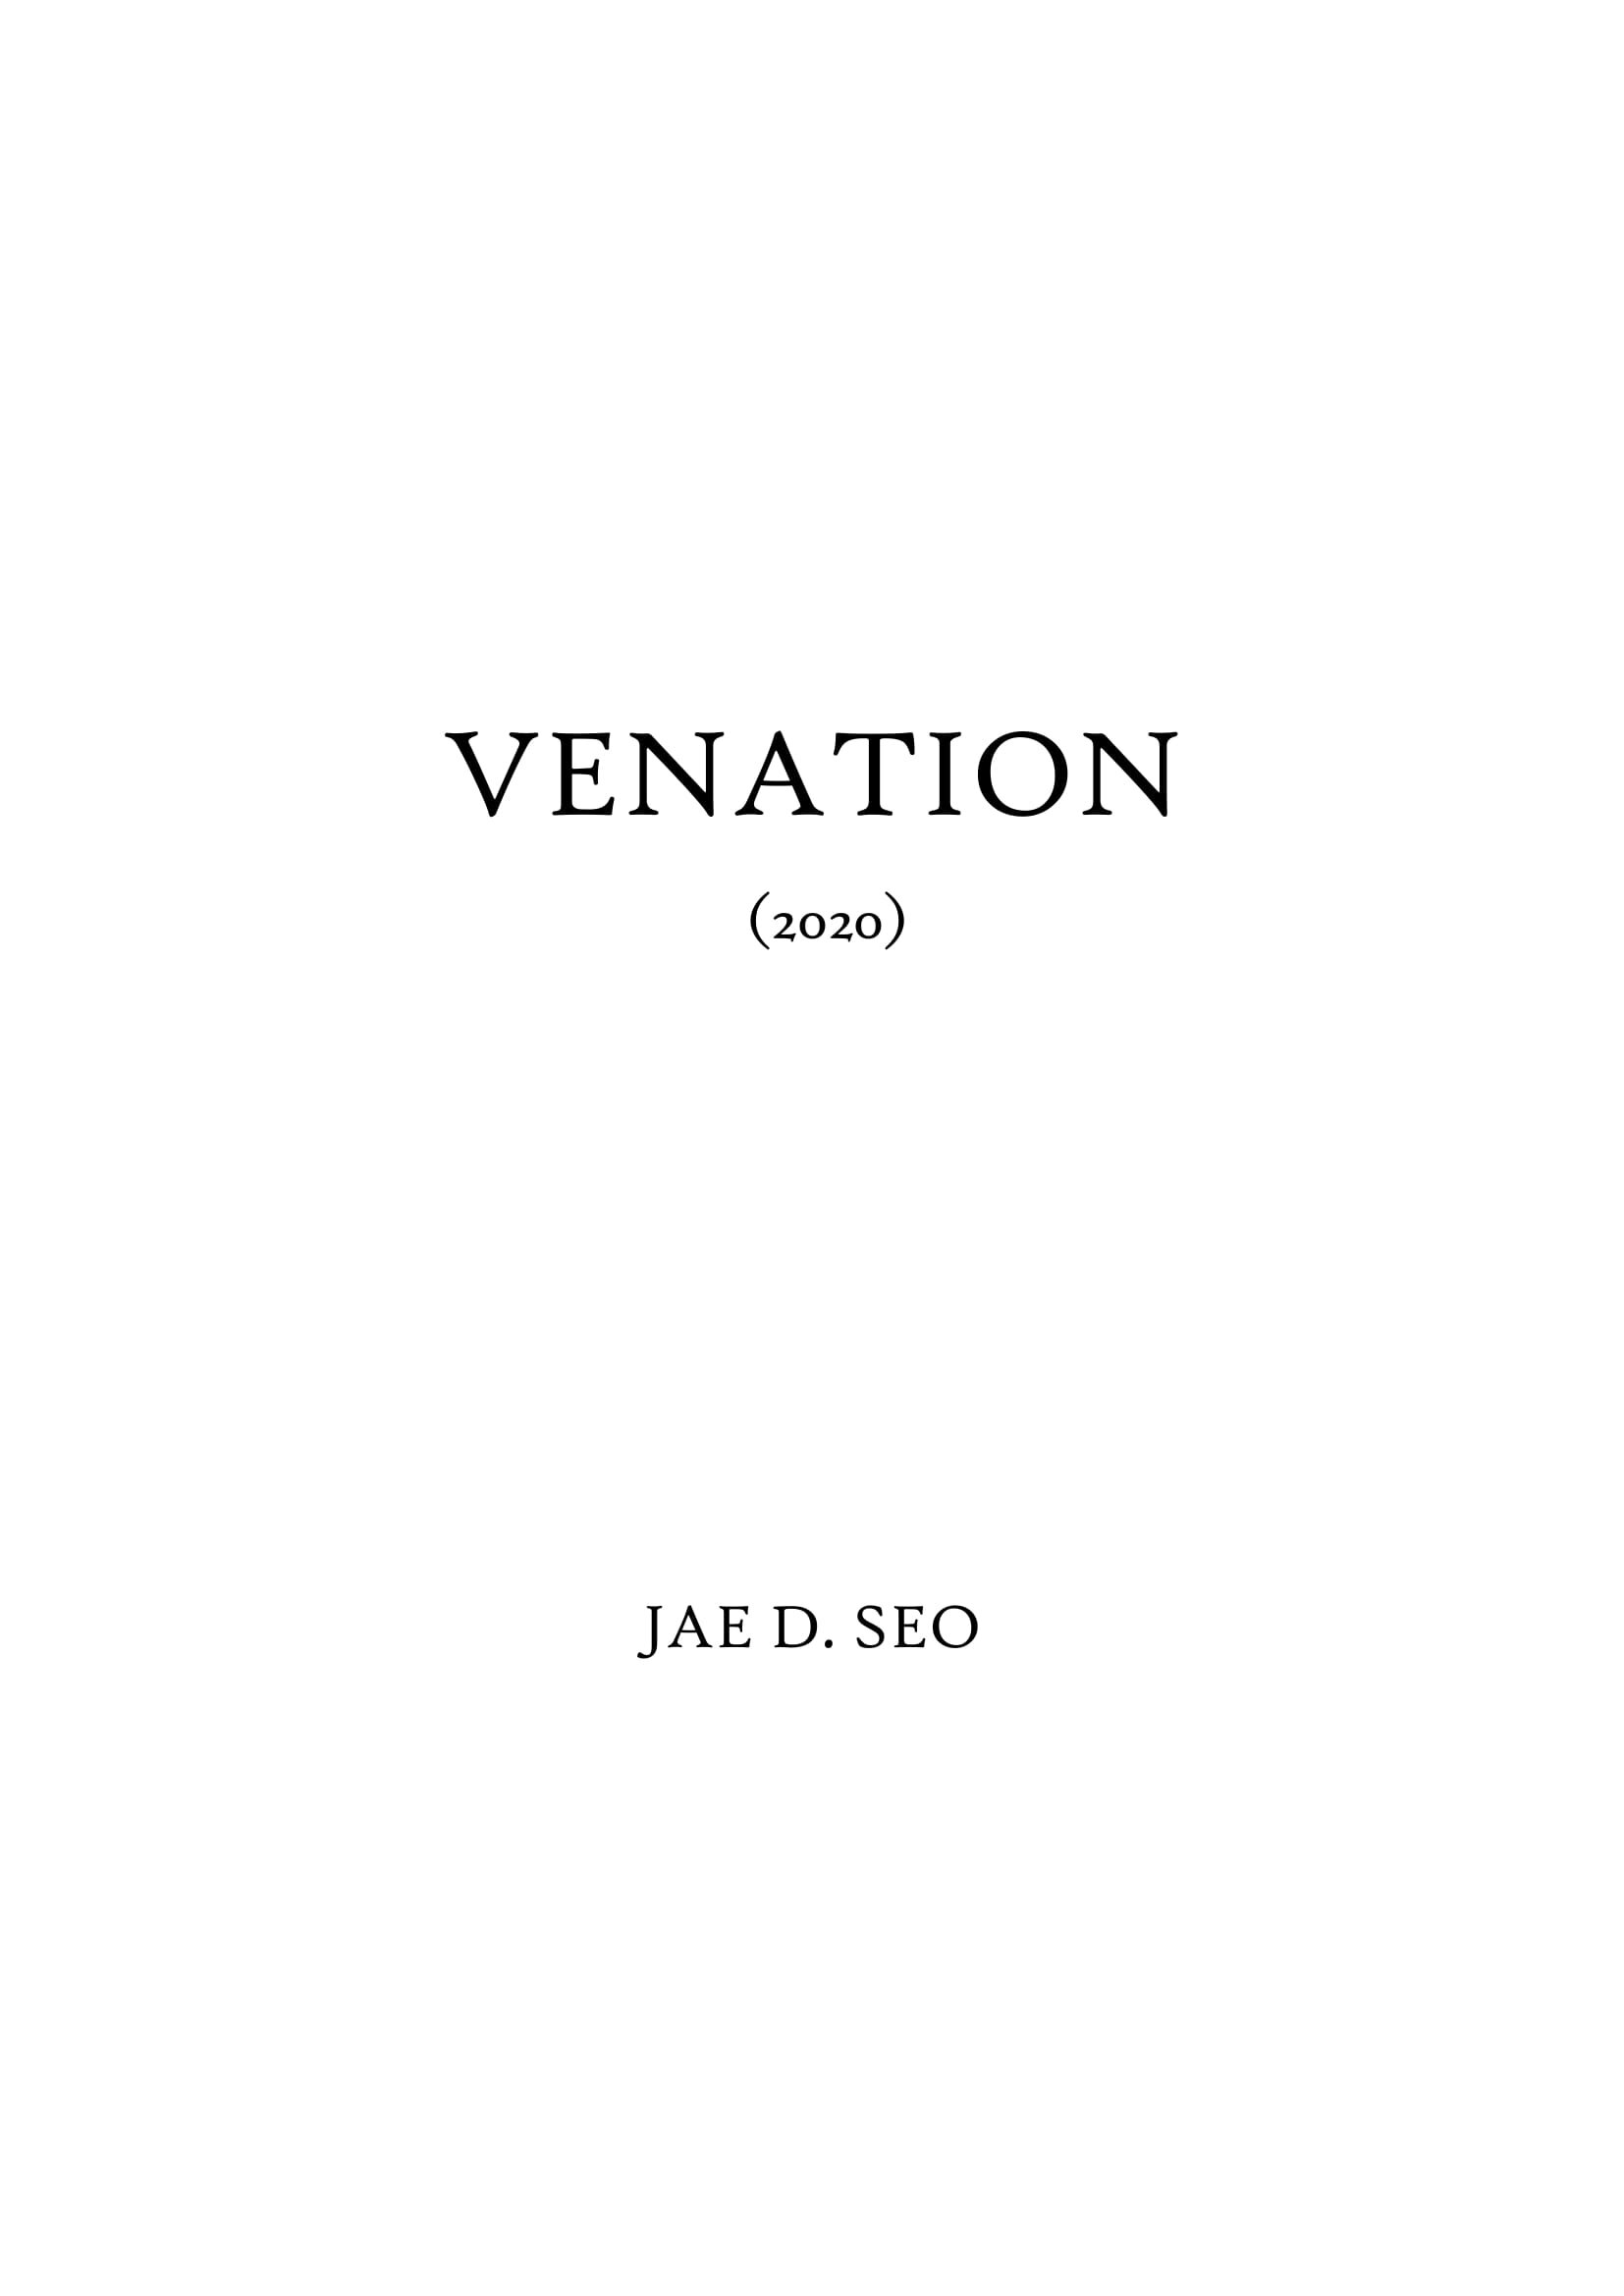 Jae Seo - Venation, for countertenor with processing (2020)-1-5-1.jpg